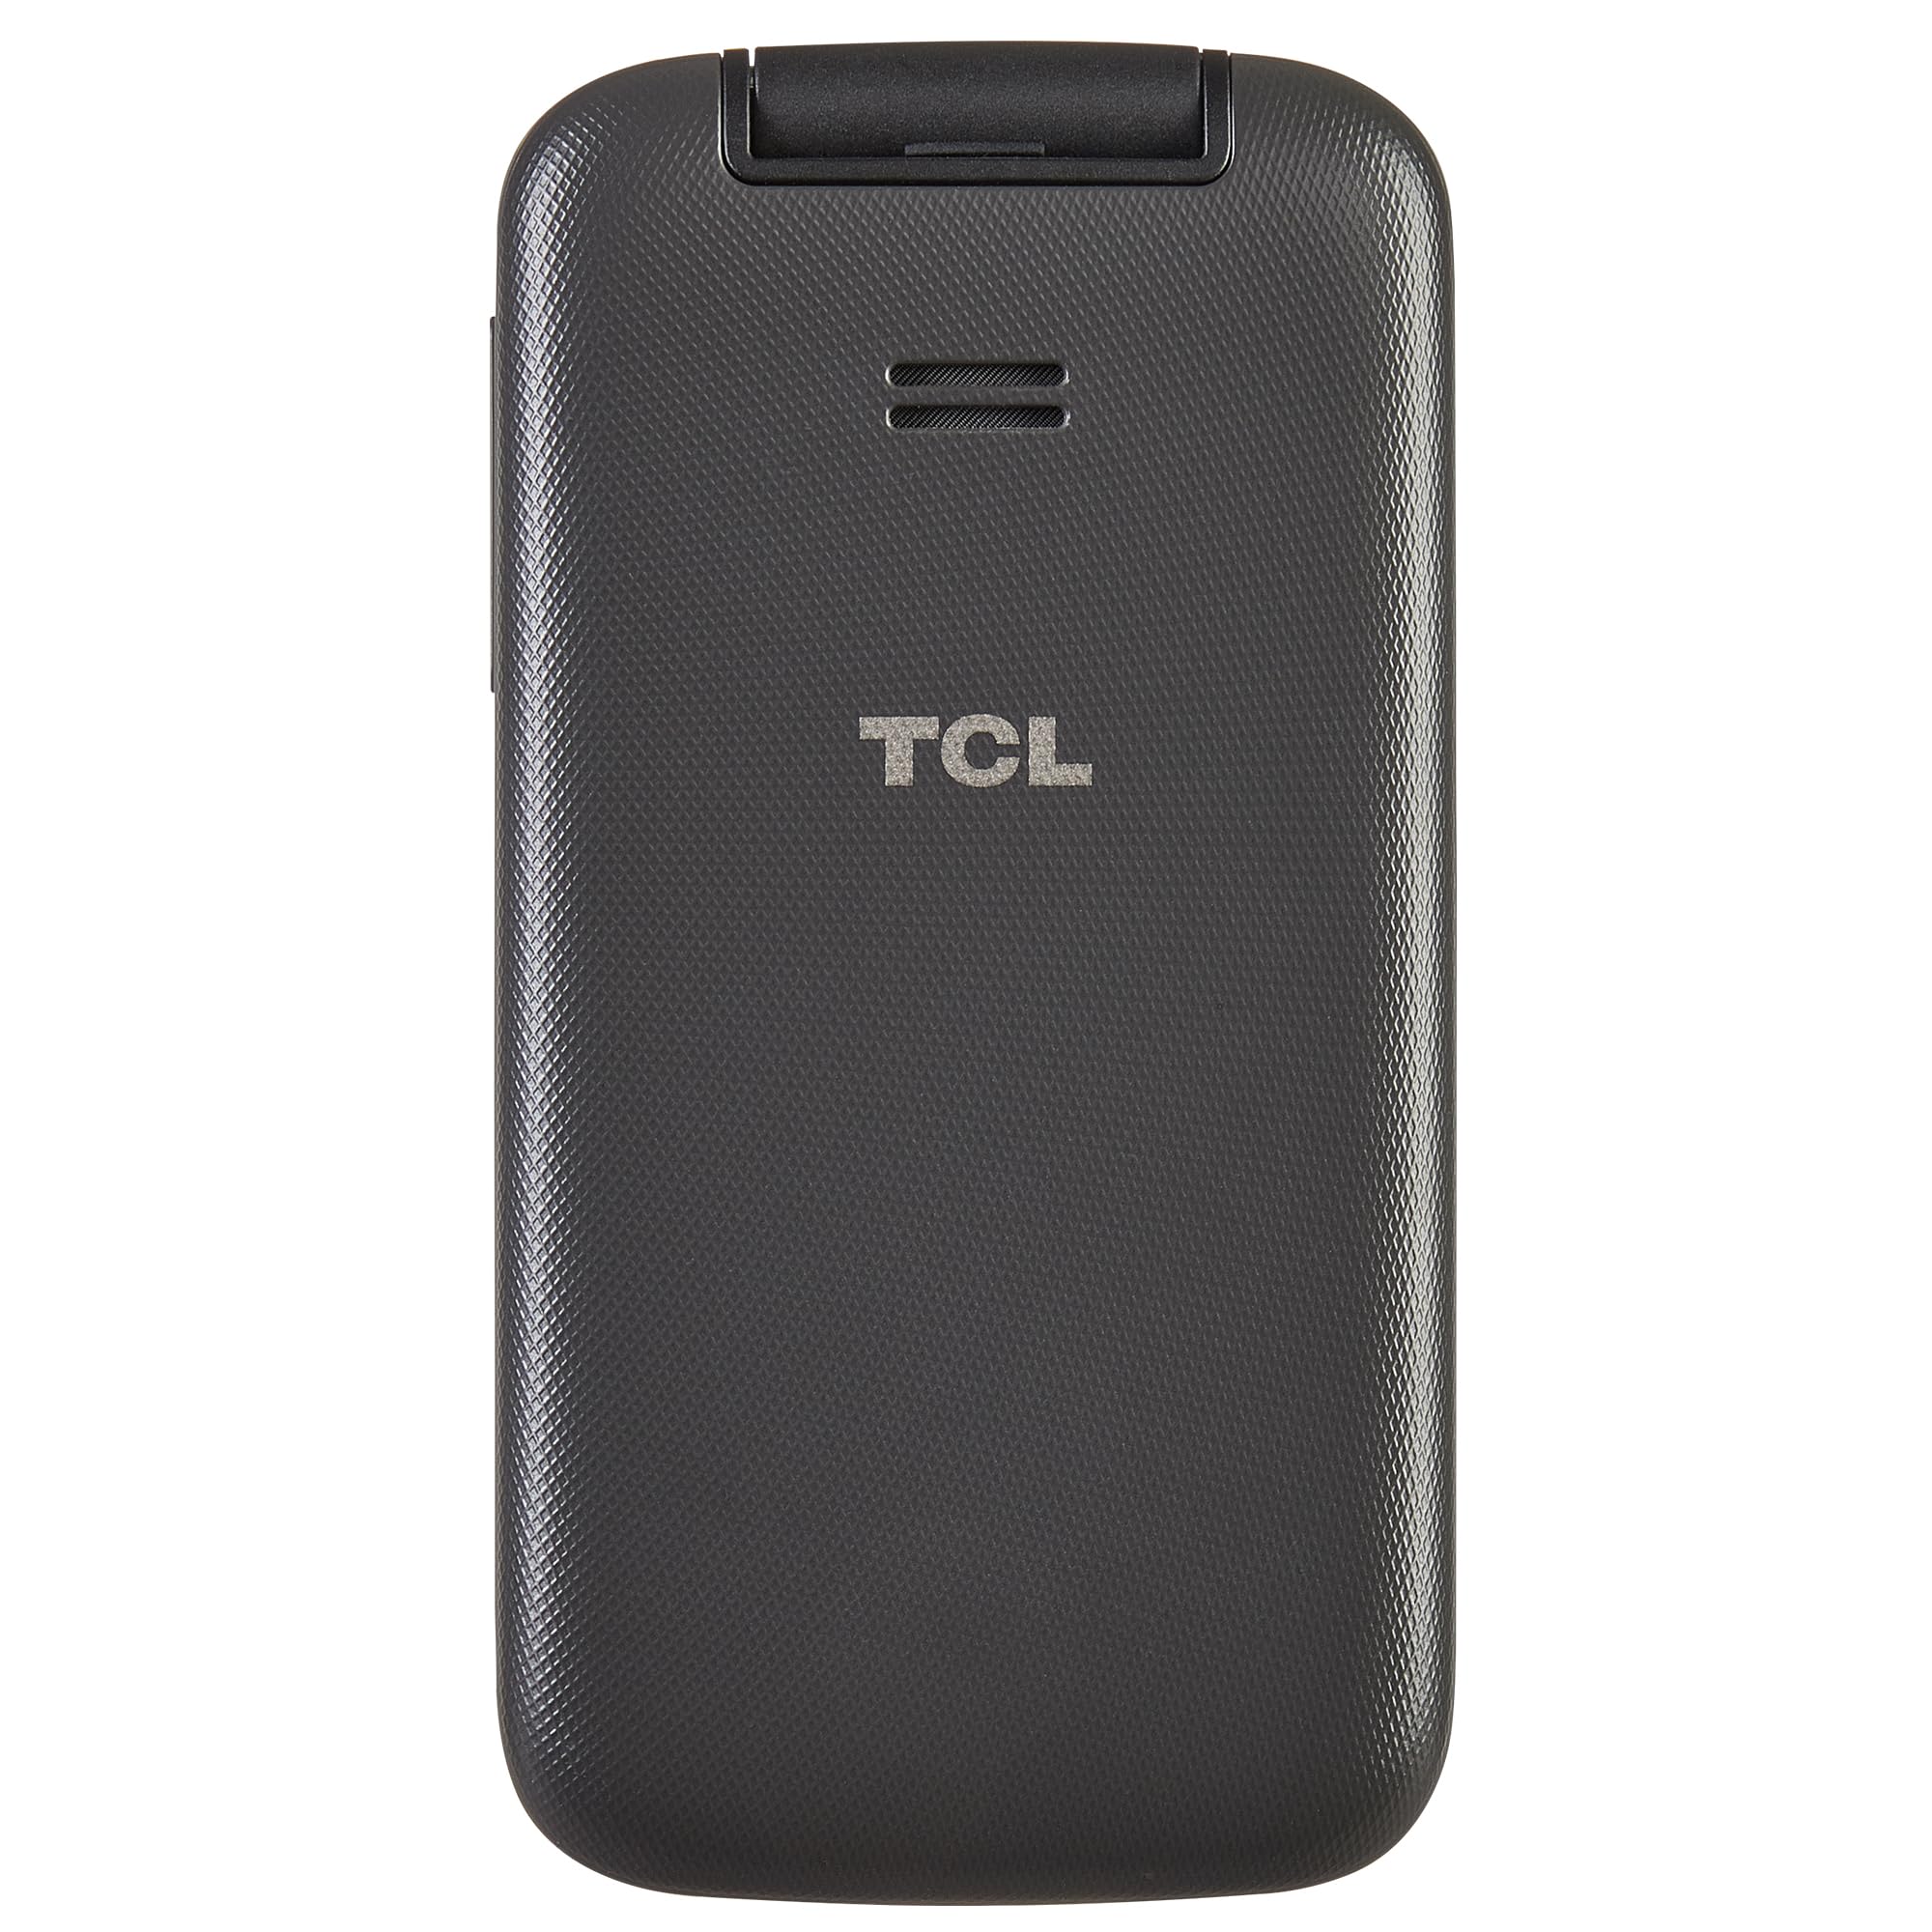 Total by Verizon TCL Flip 2, 16GB, Black - Prepaid Feature Phone (Locked)